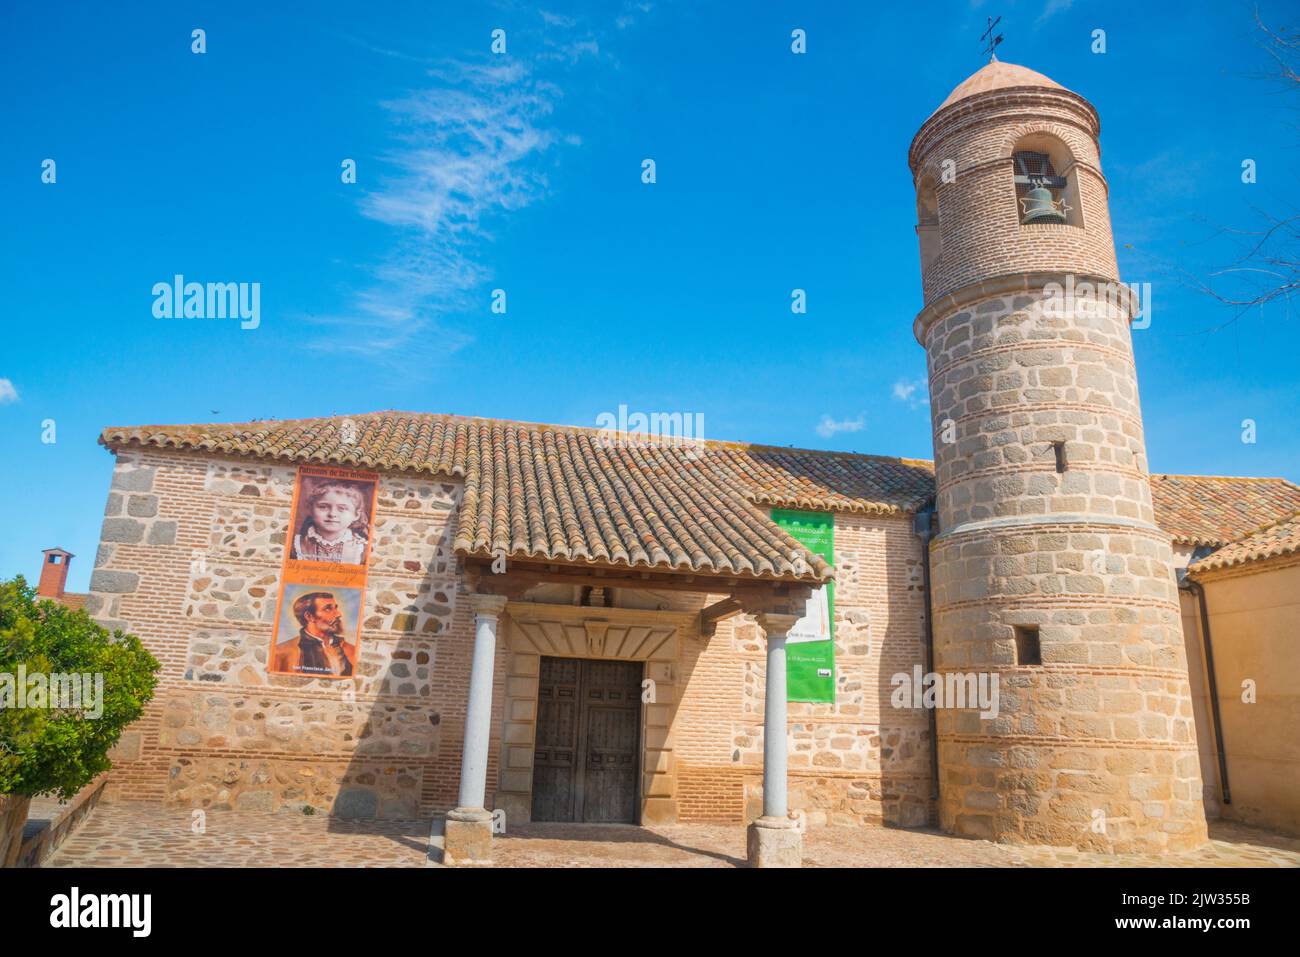 Facade of the church. Arisgotas, Toledo province, Castilla La Mancha, Spain. Stock Photo